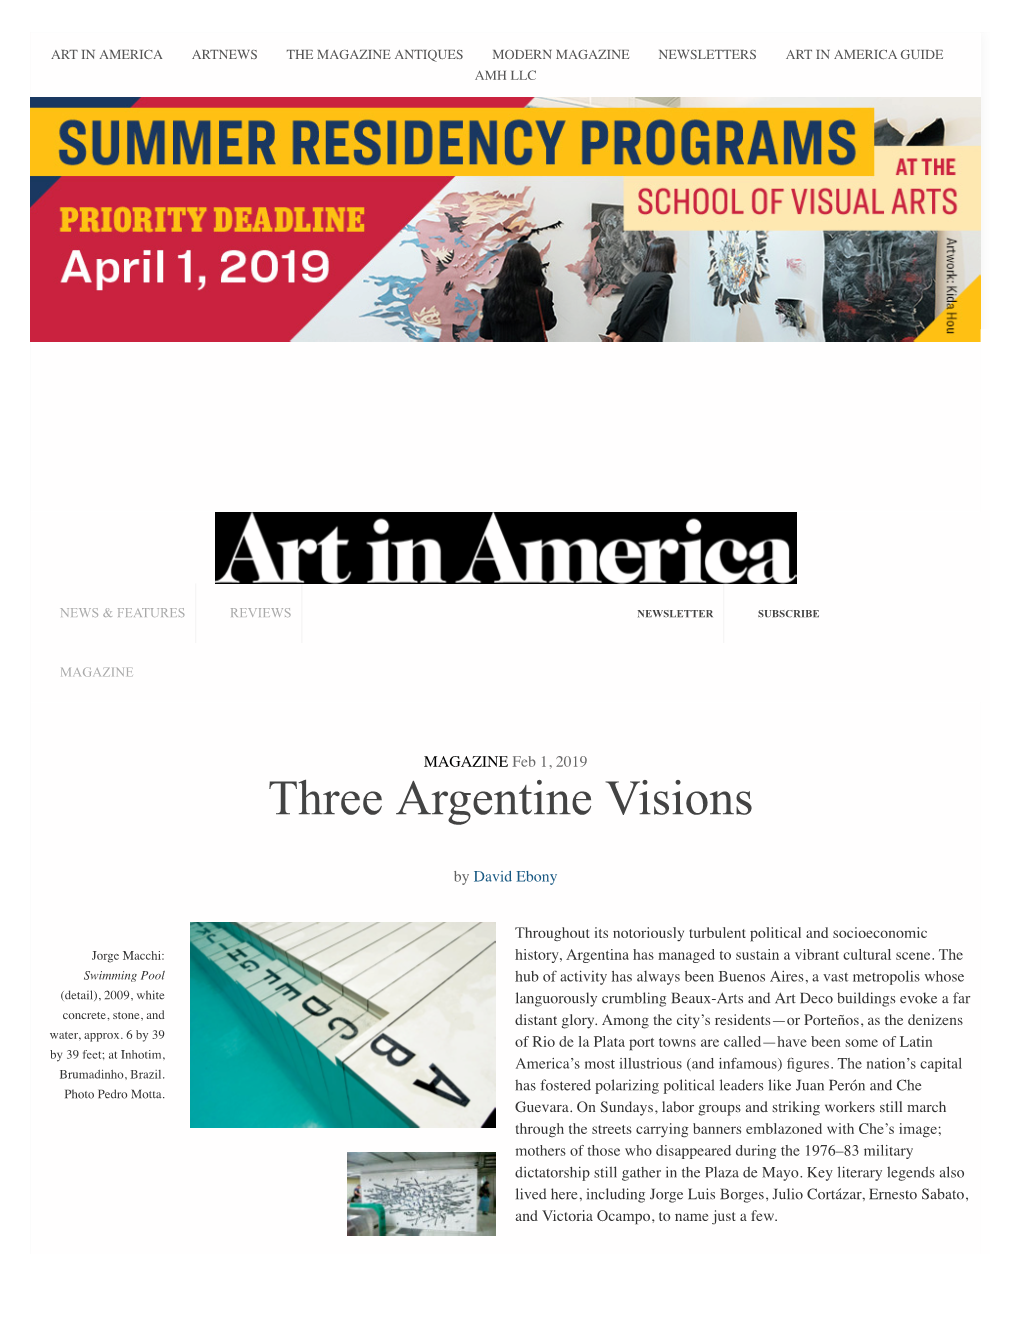 Three Argentine Visions